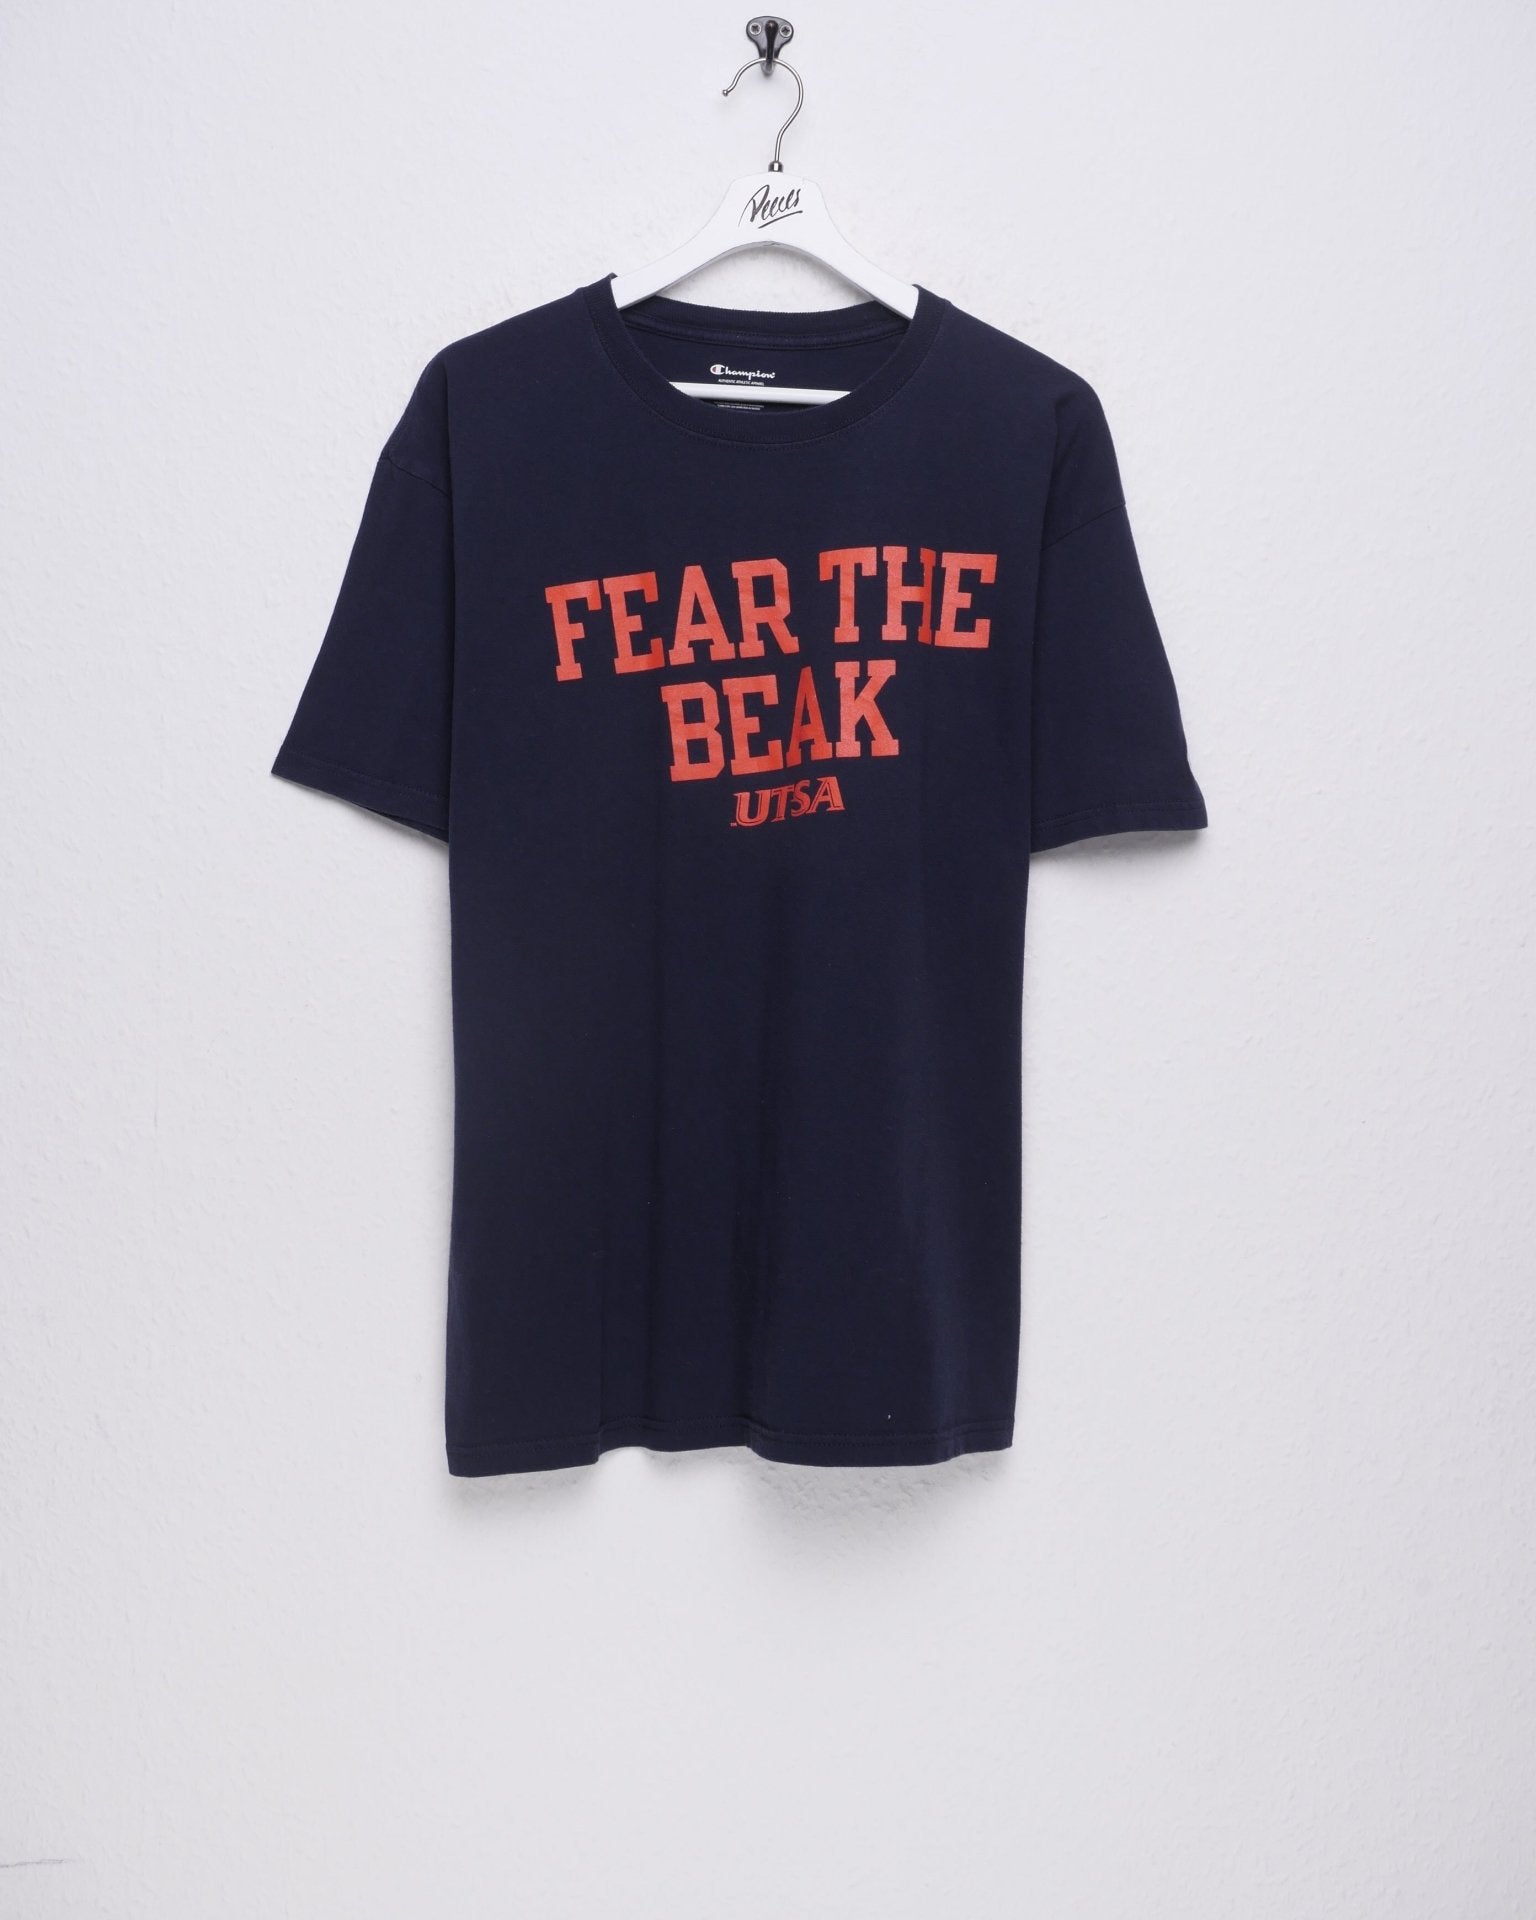 Champion Fear the Break UTSA printed Logo Shirt - Peeces